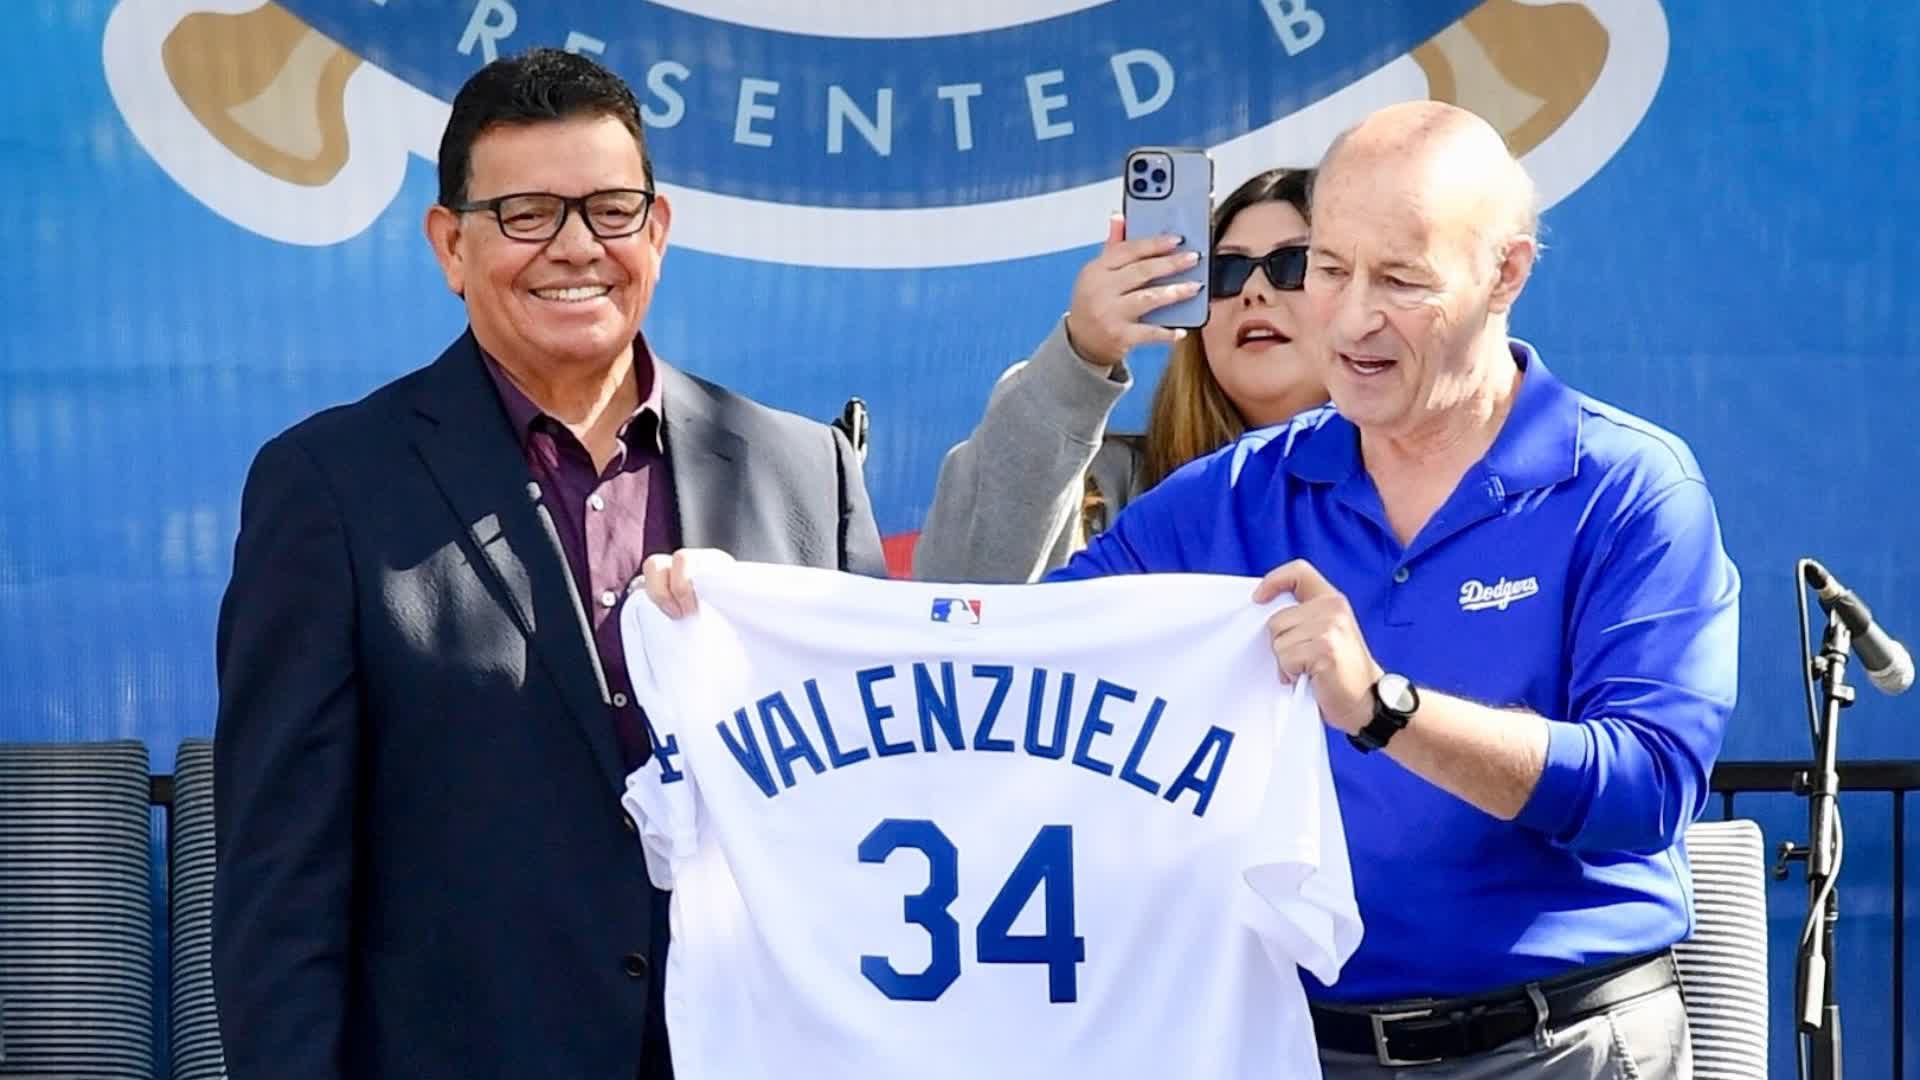 LA names day after Fernando Valenzuela – NBC Los Angeles